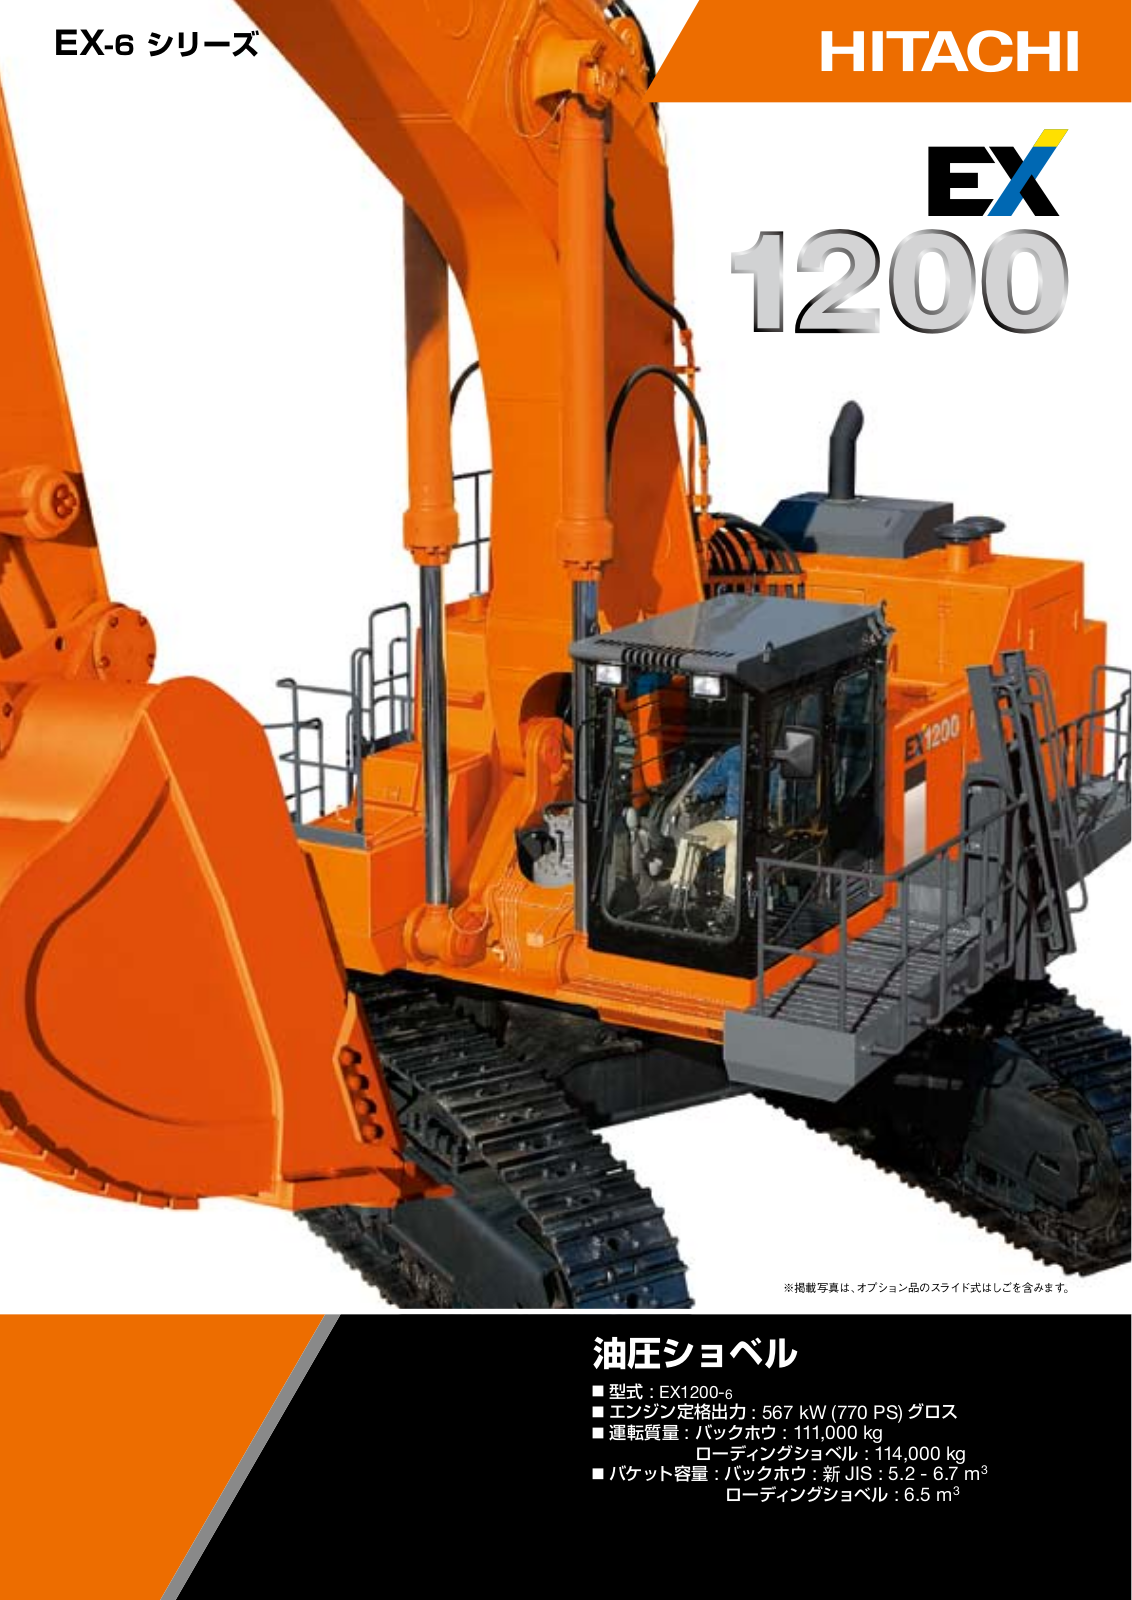 HITACHI EX1200 User Manual